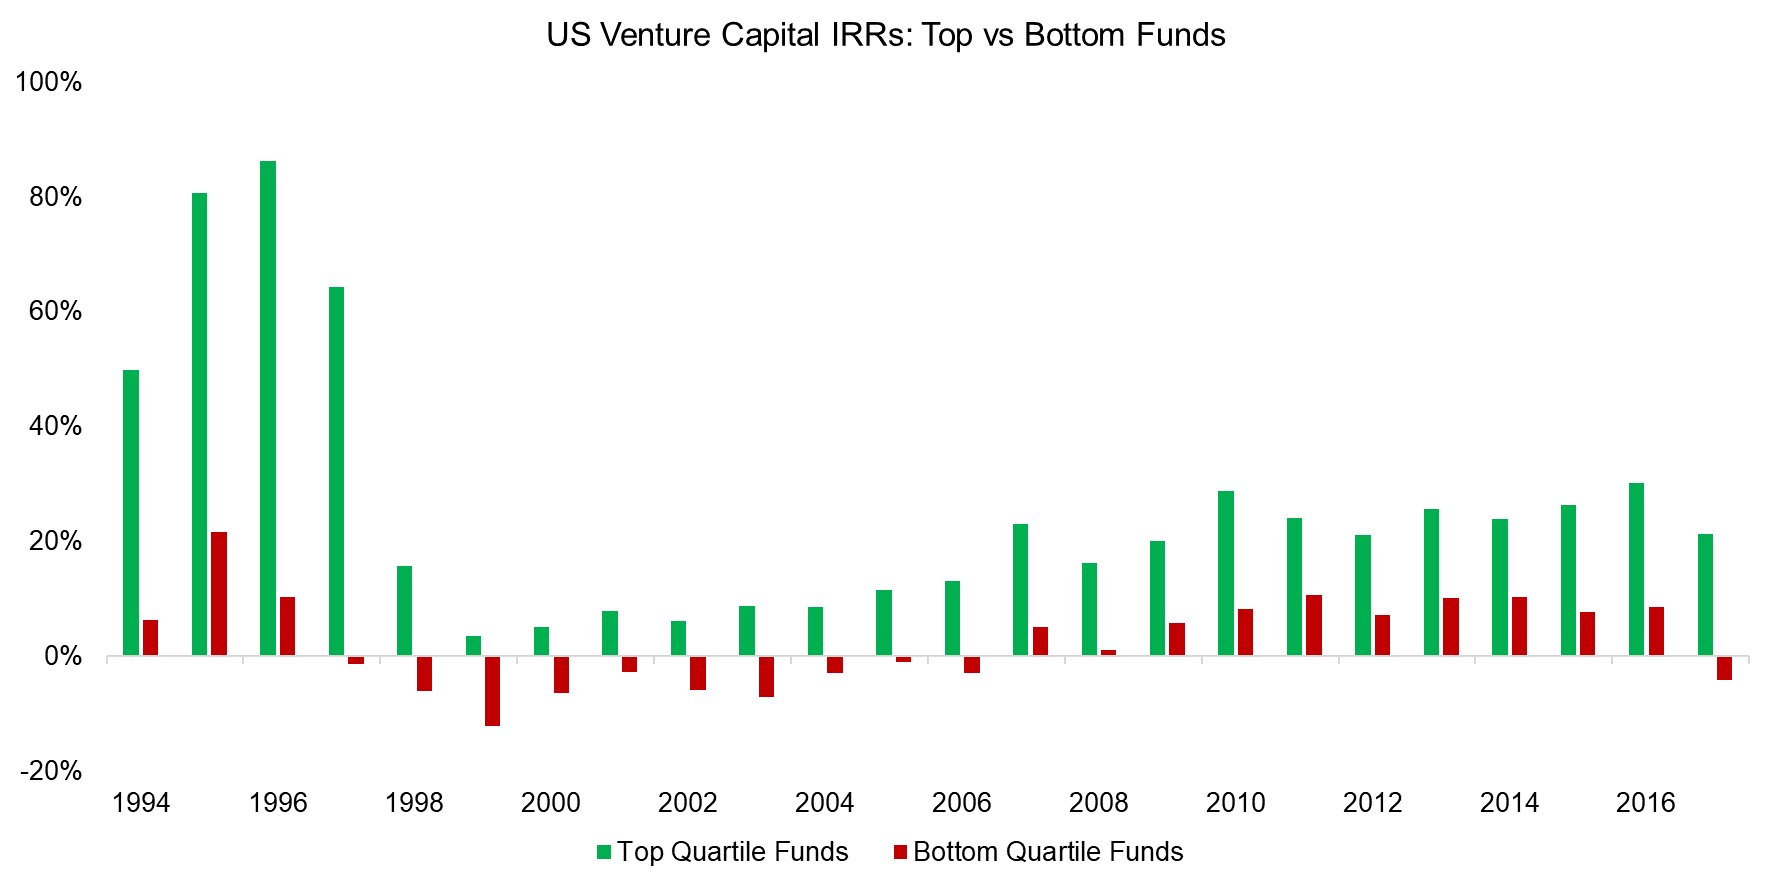 US Venture Capital IRRs Top vs Bottom Funds